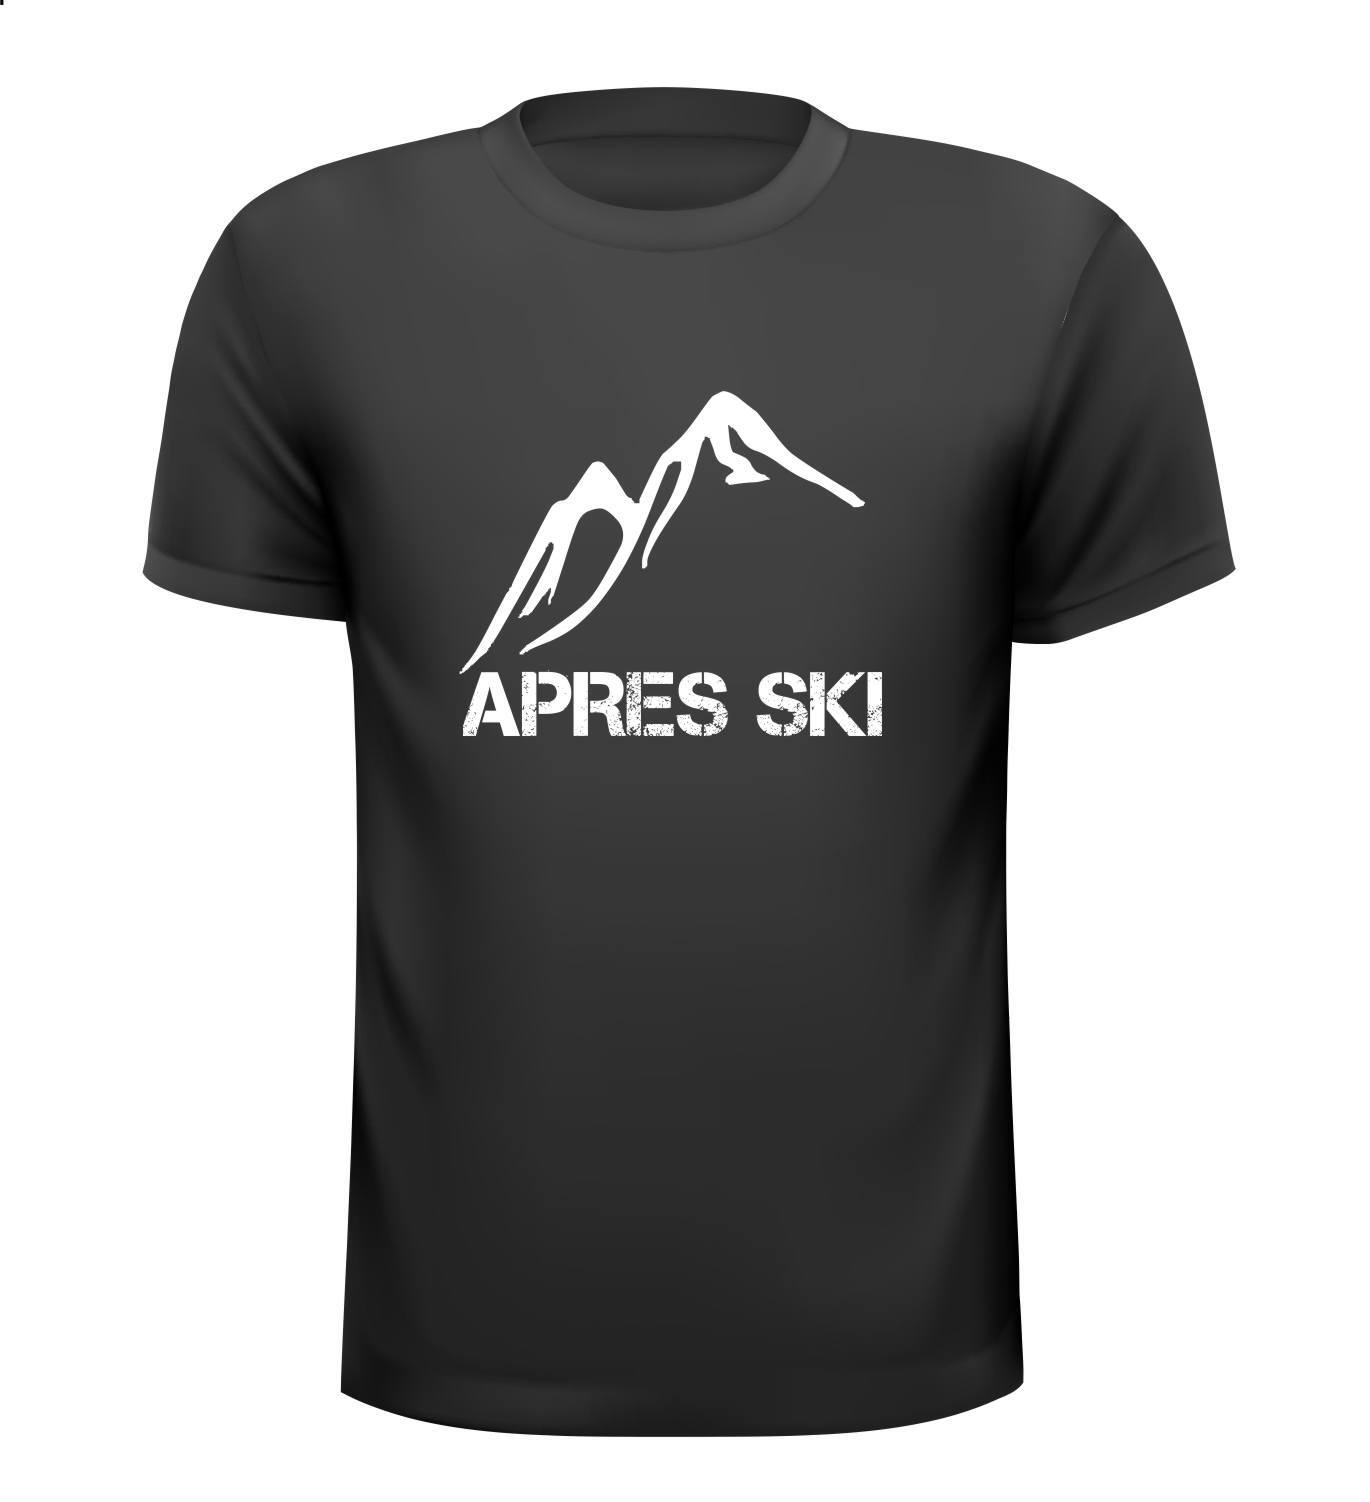 Apres ski shirt